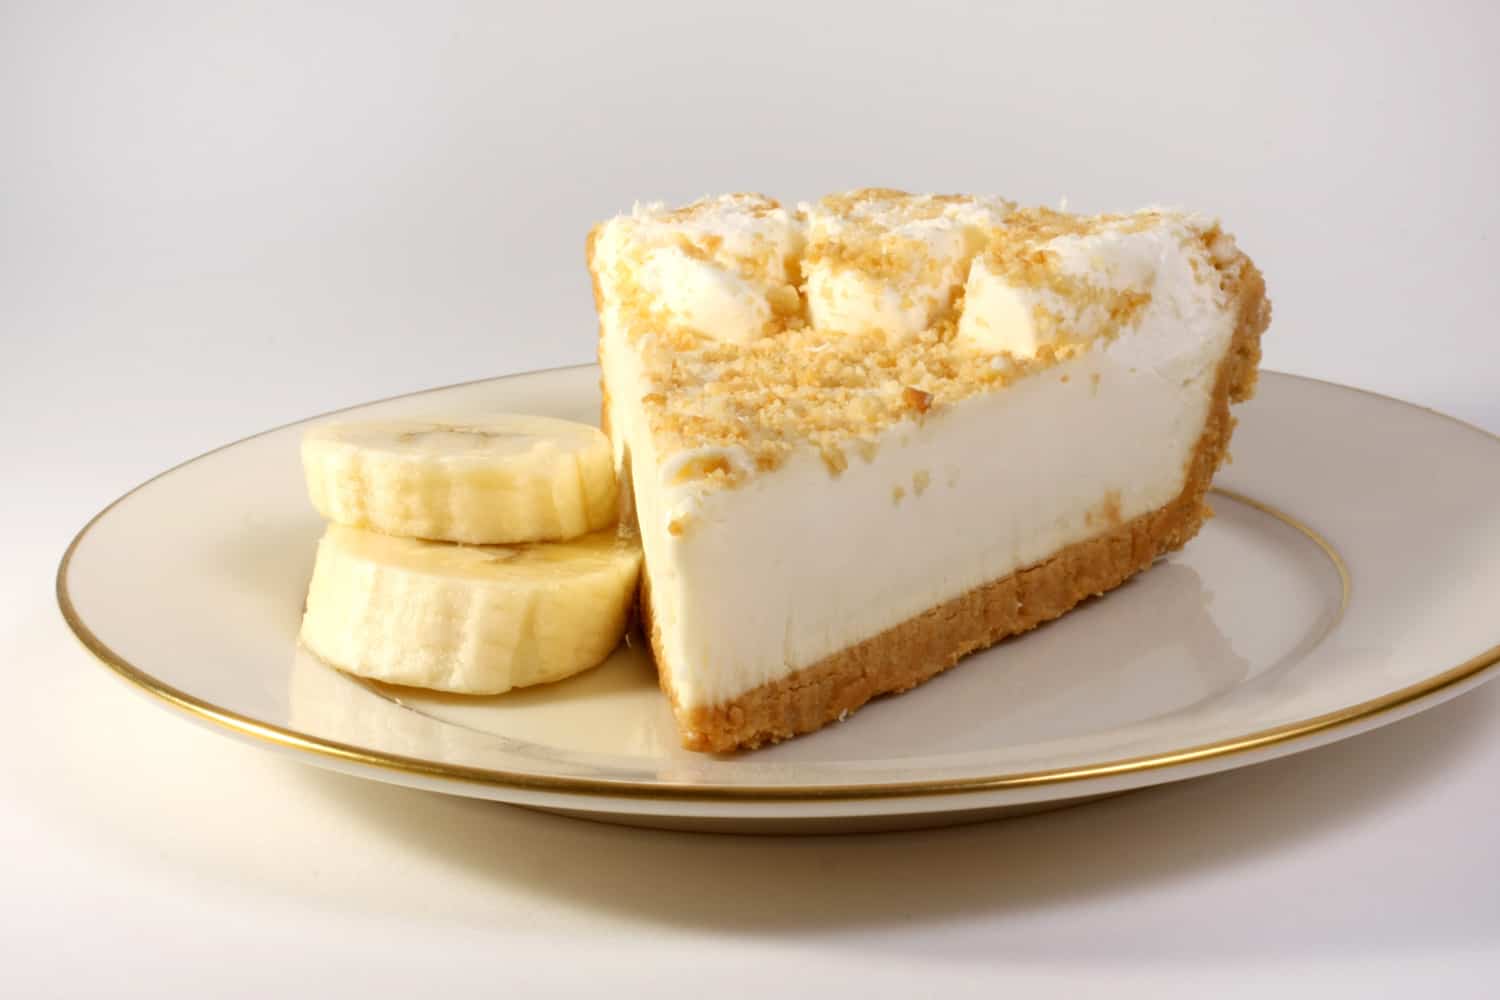 Slice of banana cream pie.